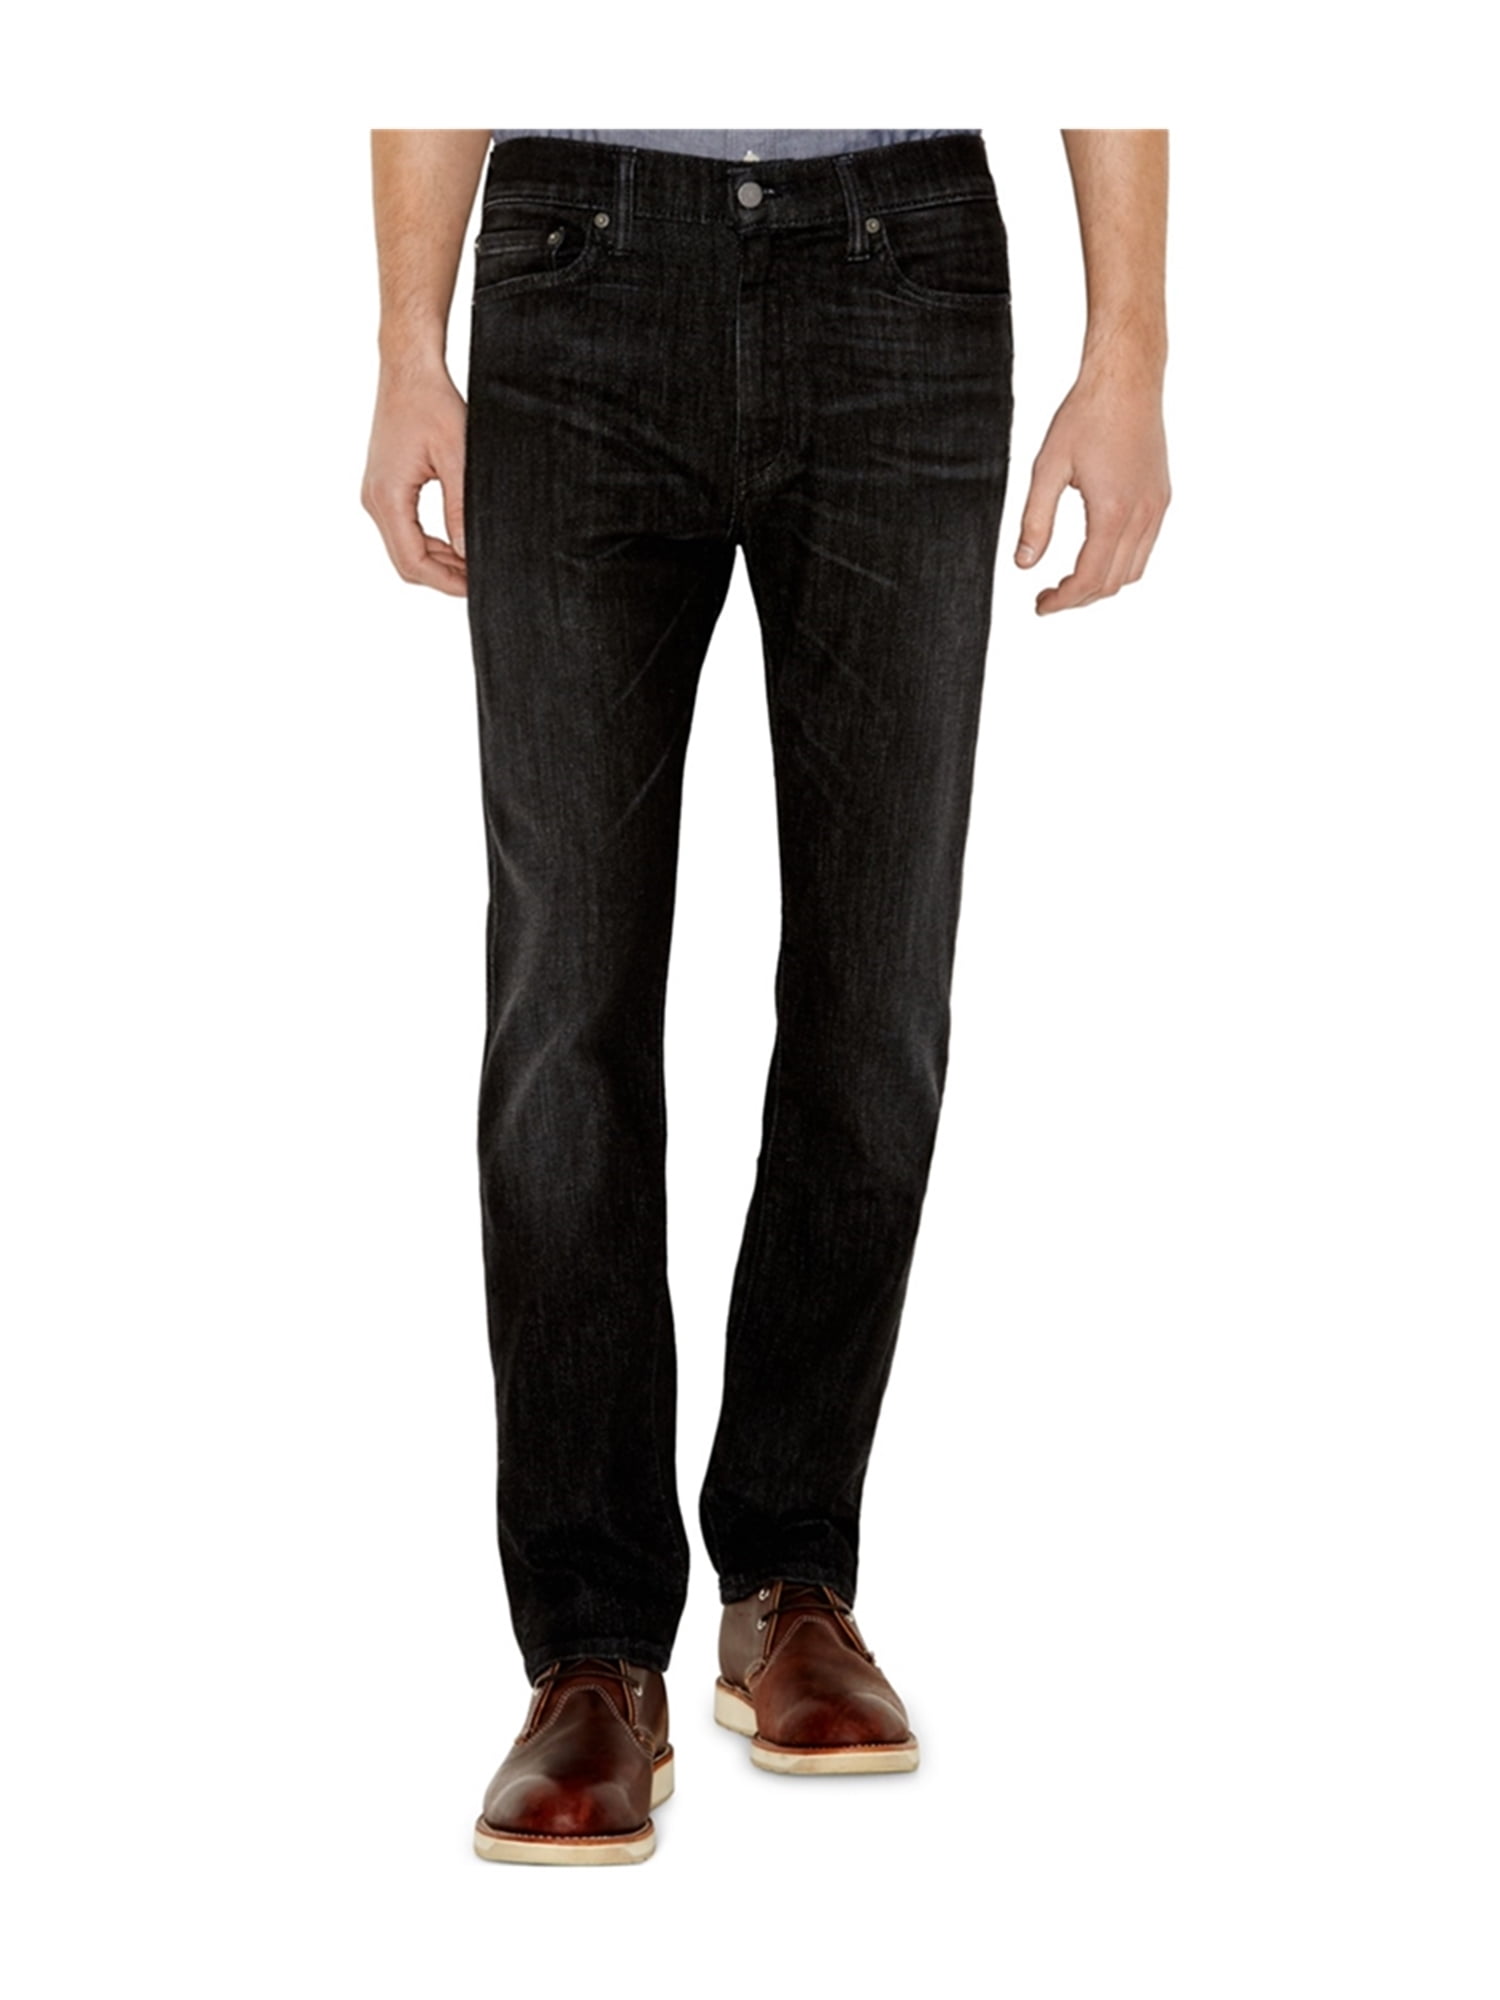 Levi's Mens Elastic Cuff Straight Leg Jeans black 34x30 | Walmart Canada